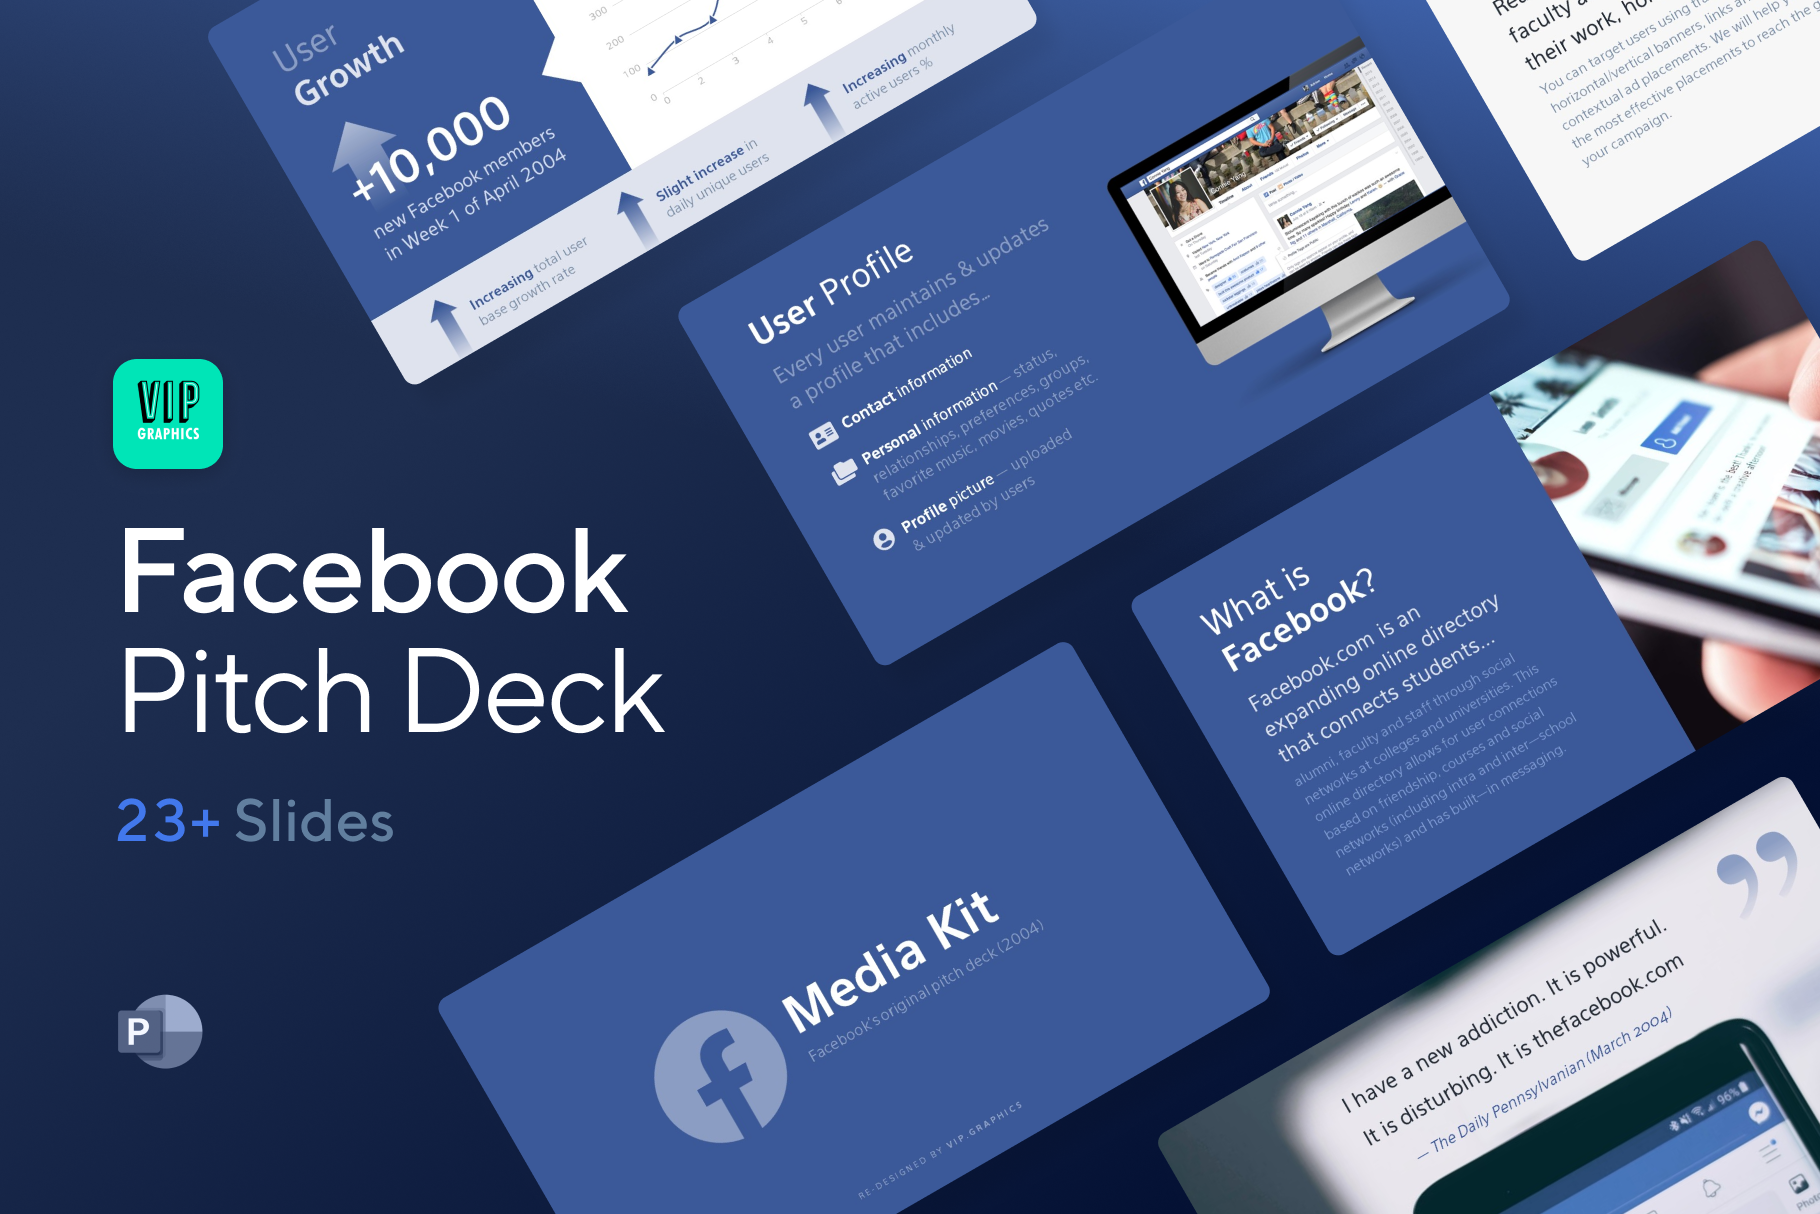 Facebook Pitch Deck Template: based on Facebook's 2004 media kit